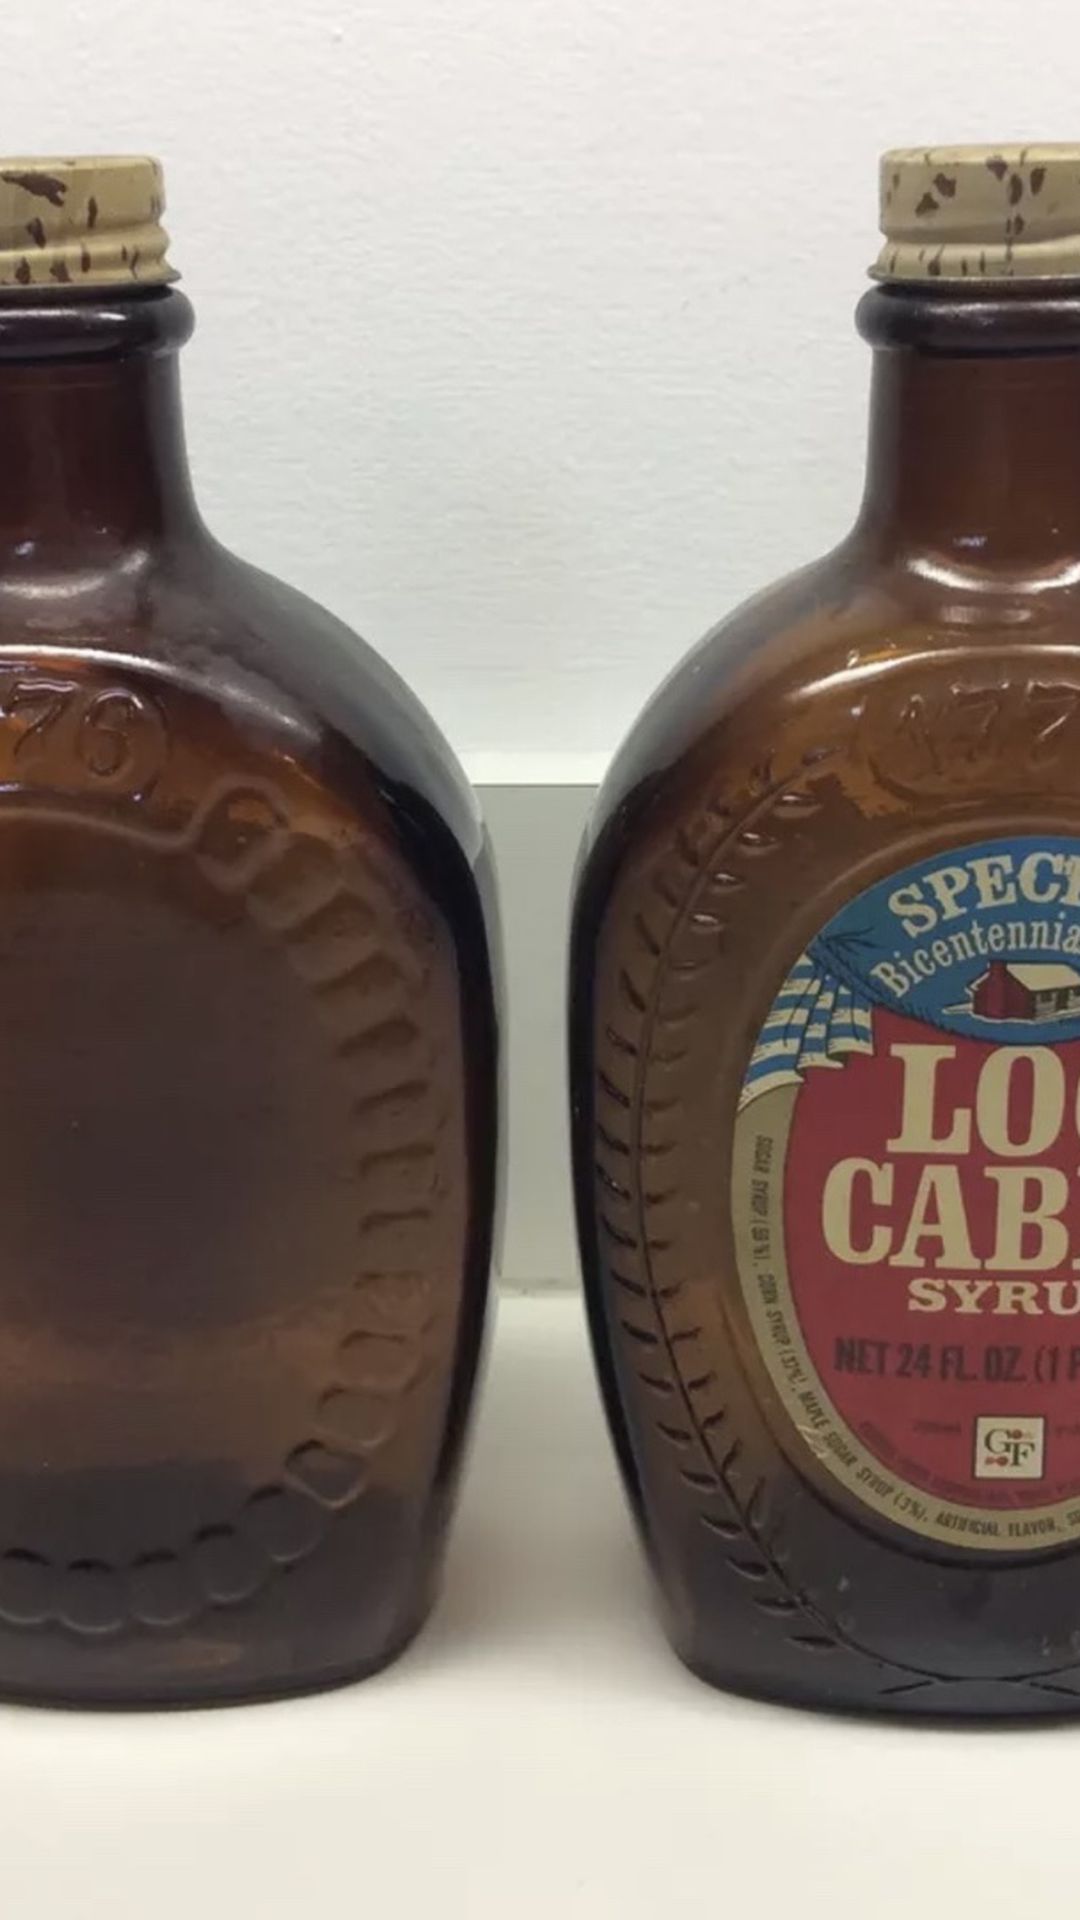 Vintage Log Cabin Syrup Bottles 1776 Amber Brown Bottles Bicentennial Flask GC